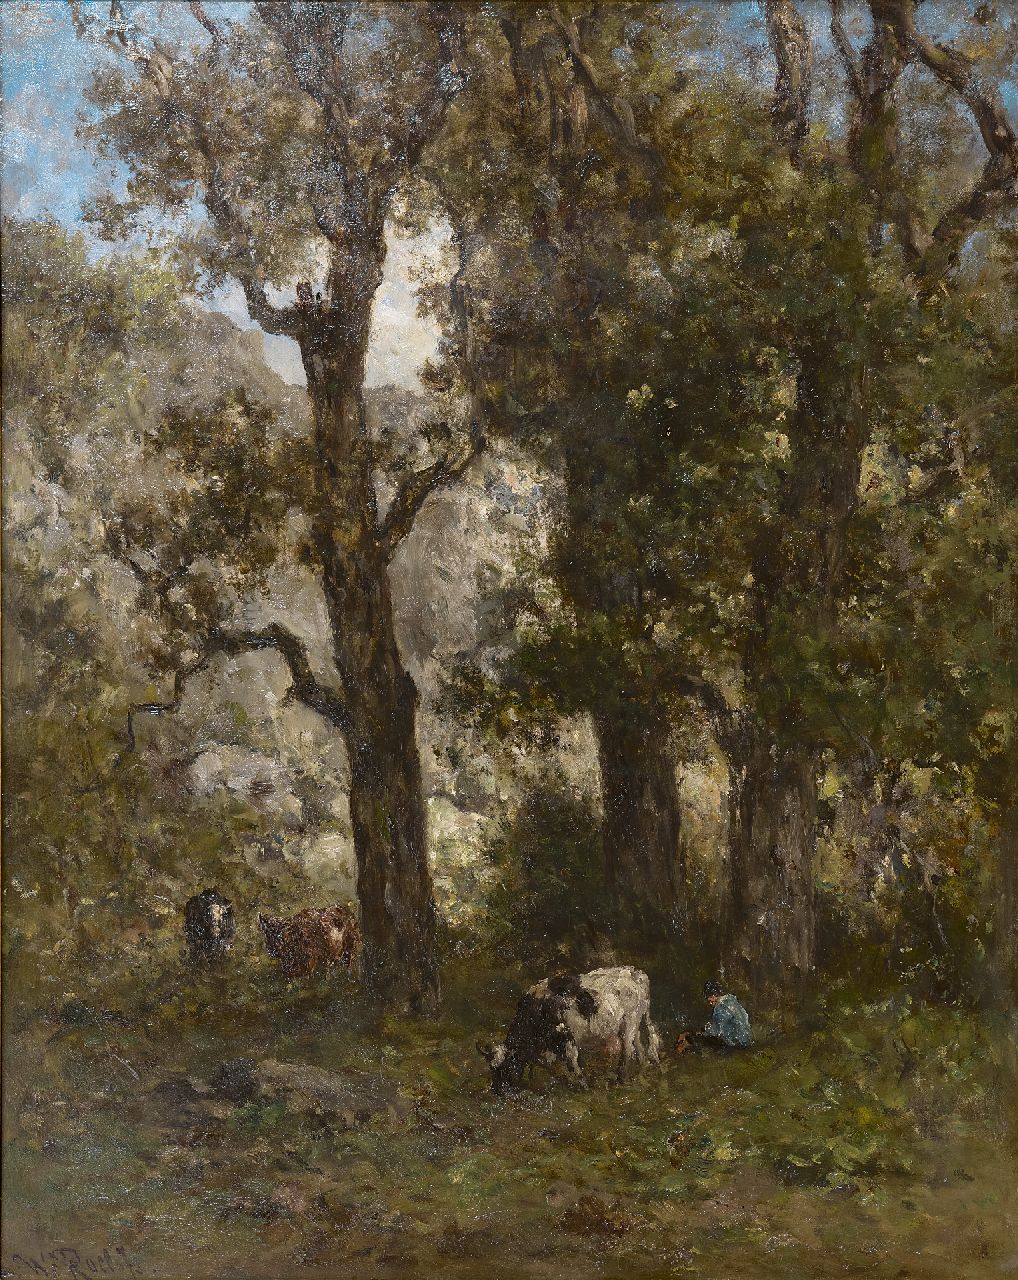 Roelofs W.  | Willem Roelofs, Herder met koeien in het bos, olieverf op paneel 56,1 x 45,8 cm, gesigneerd linksonder